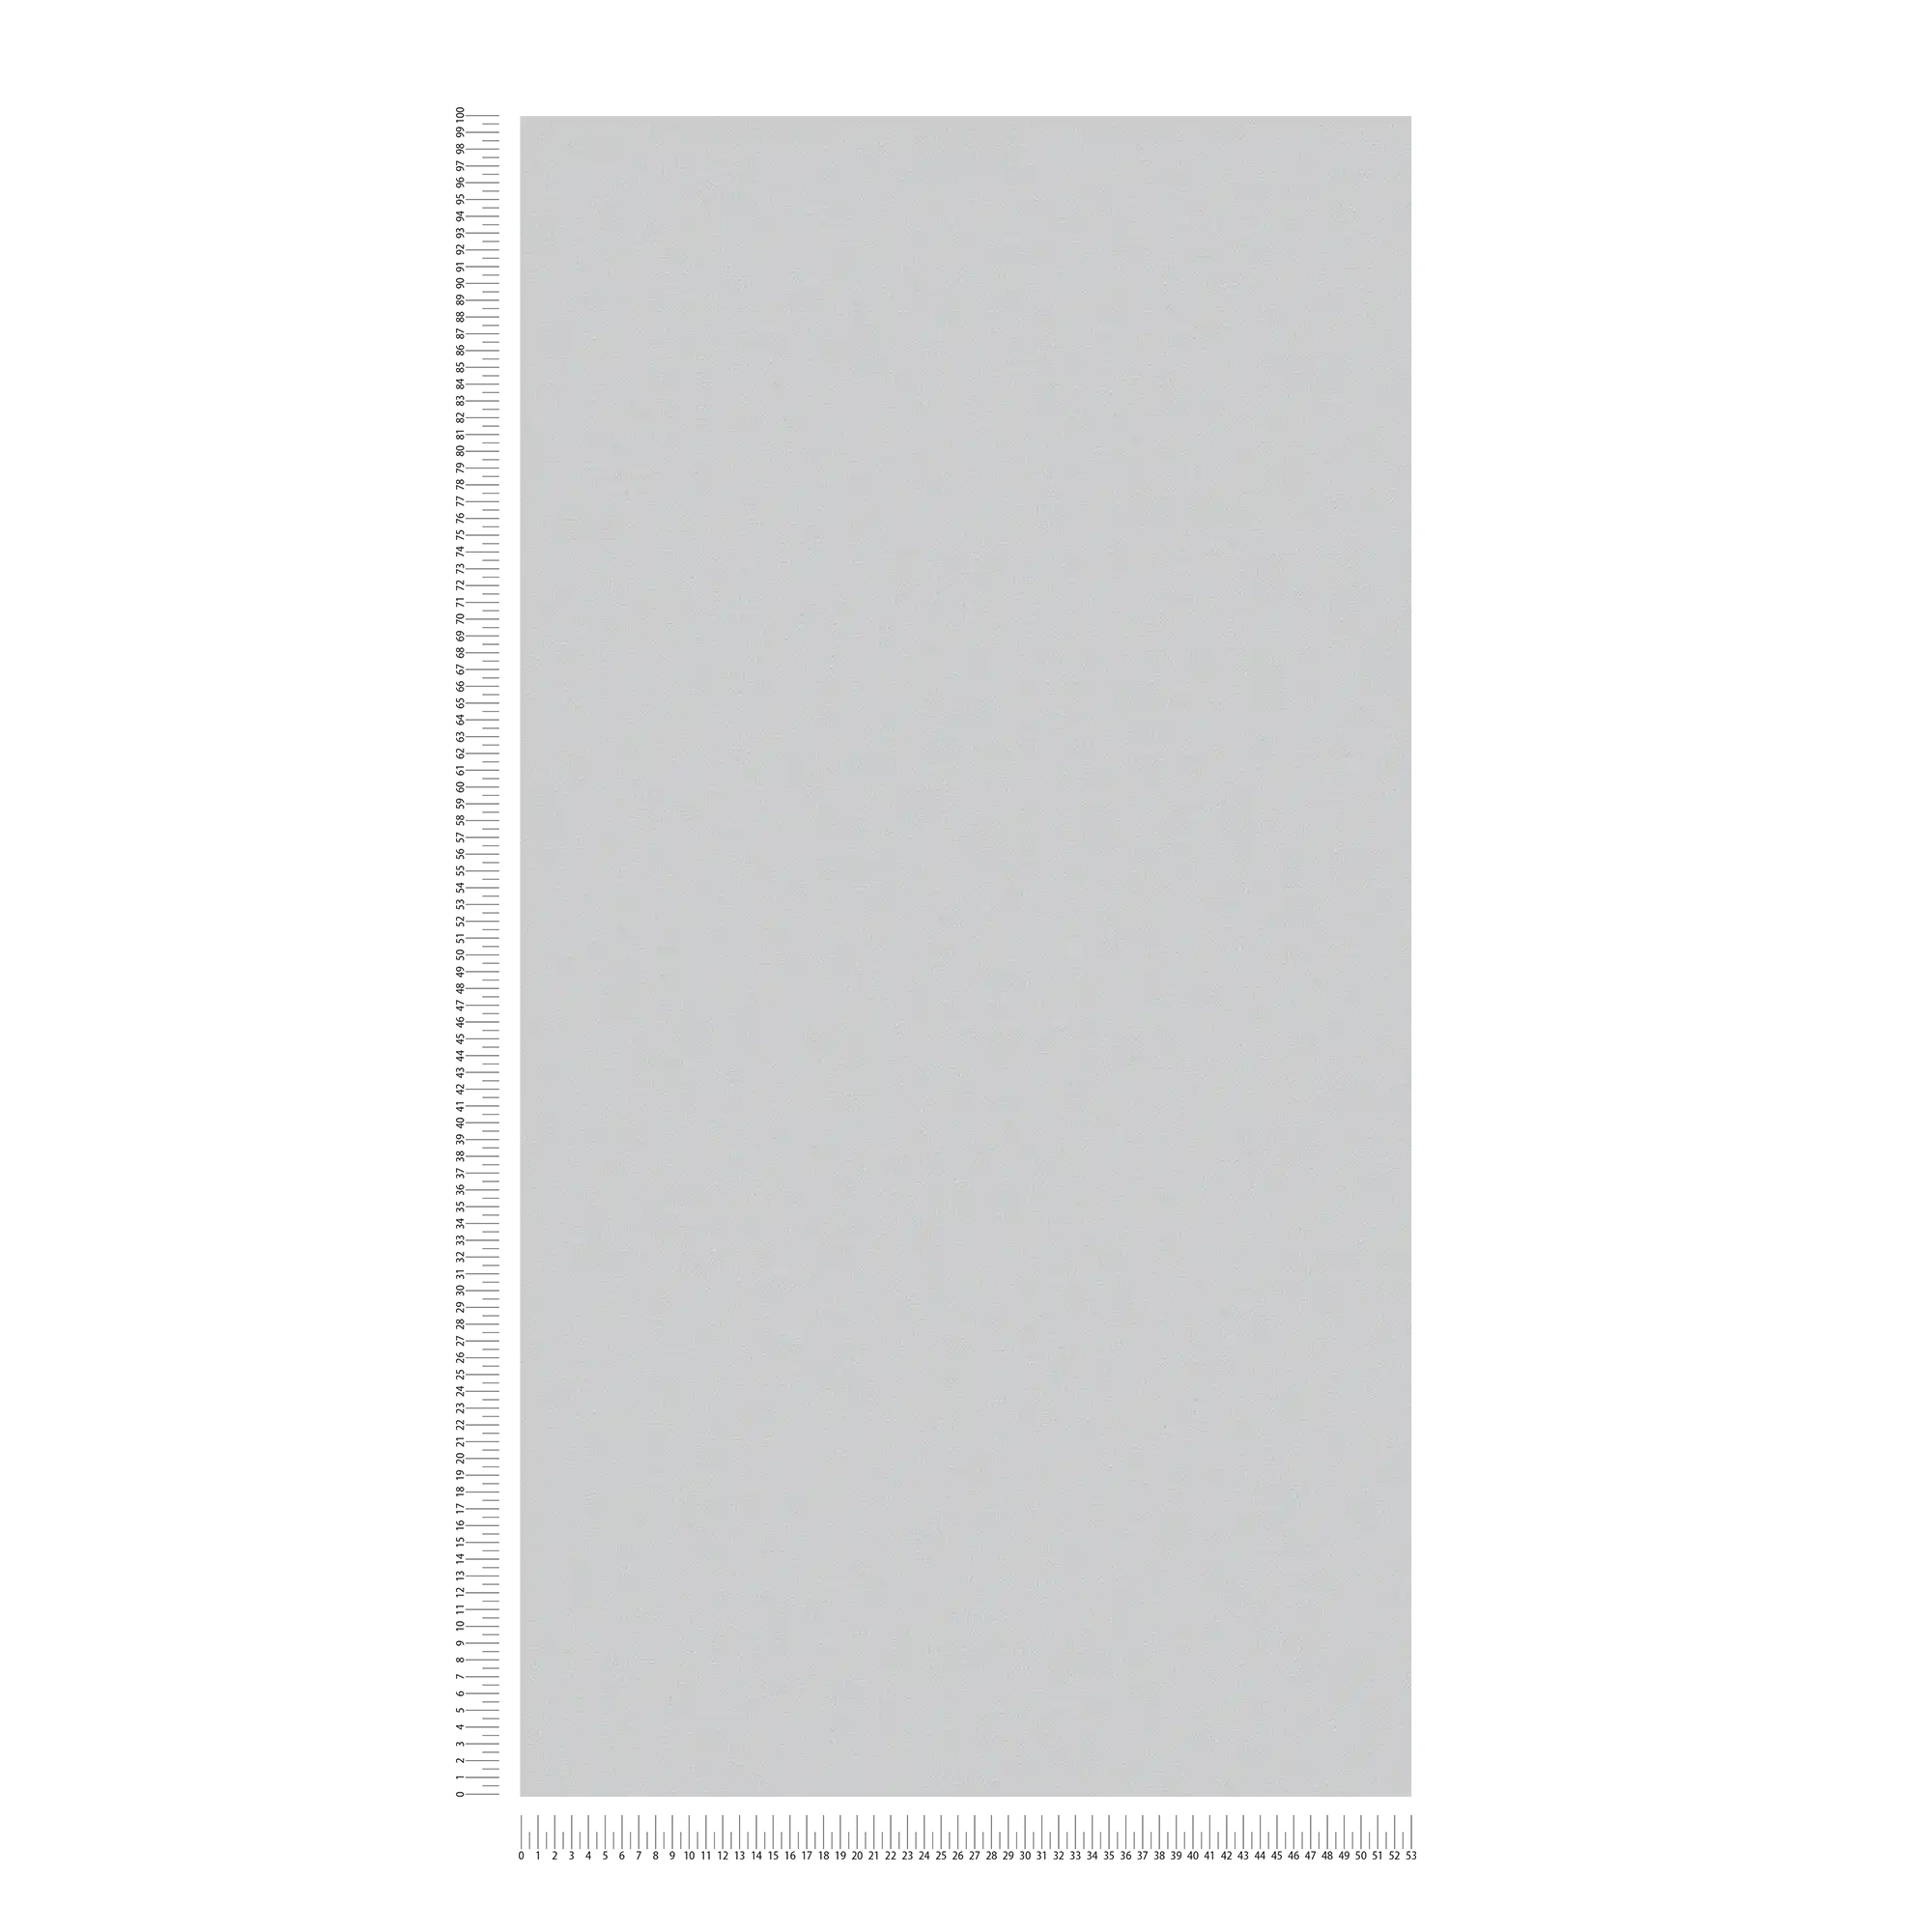             Papel pintado no tejido gris de MICHASLKY, liso con estructura textil
        